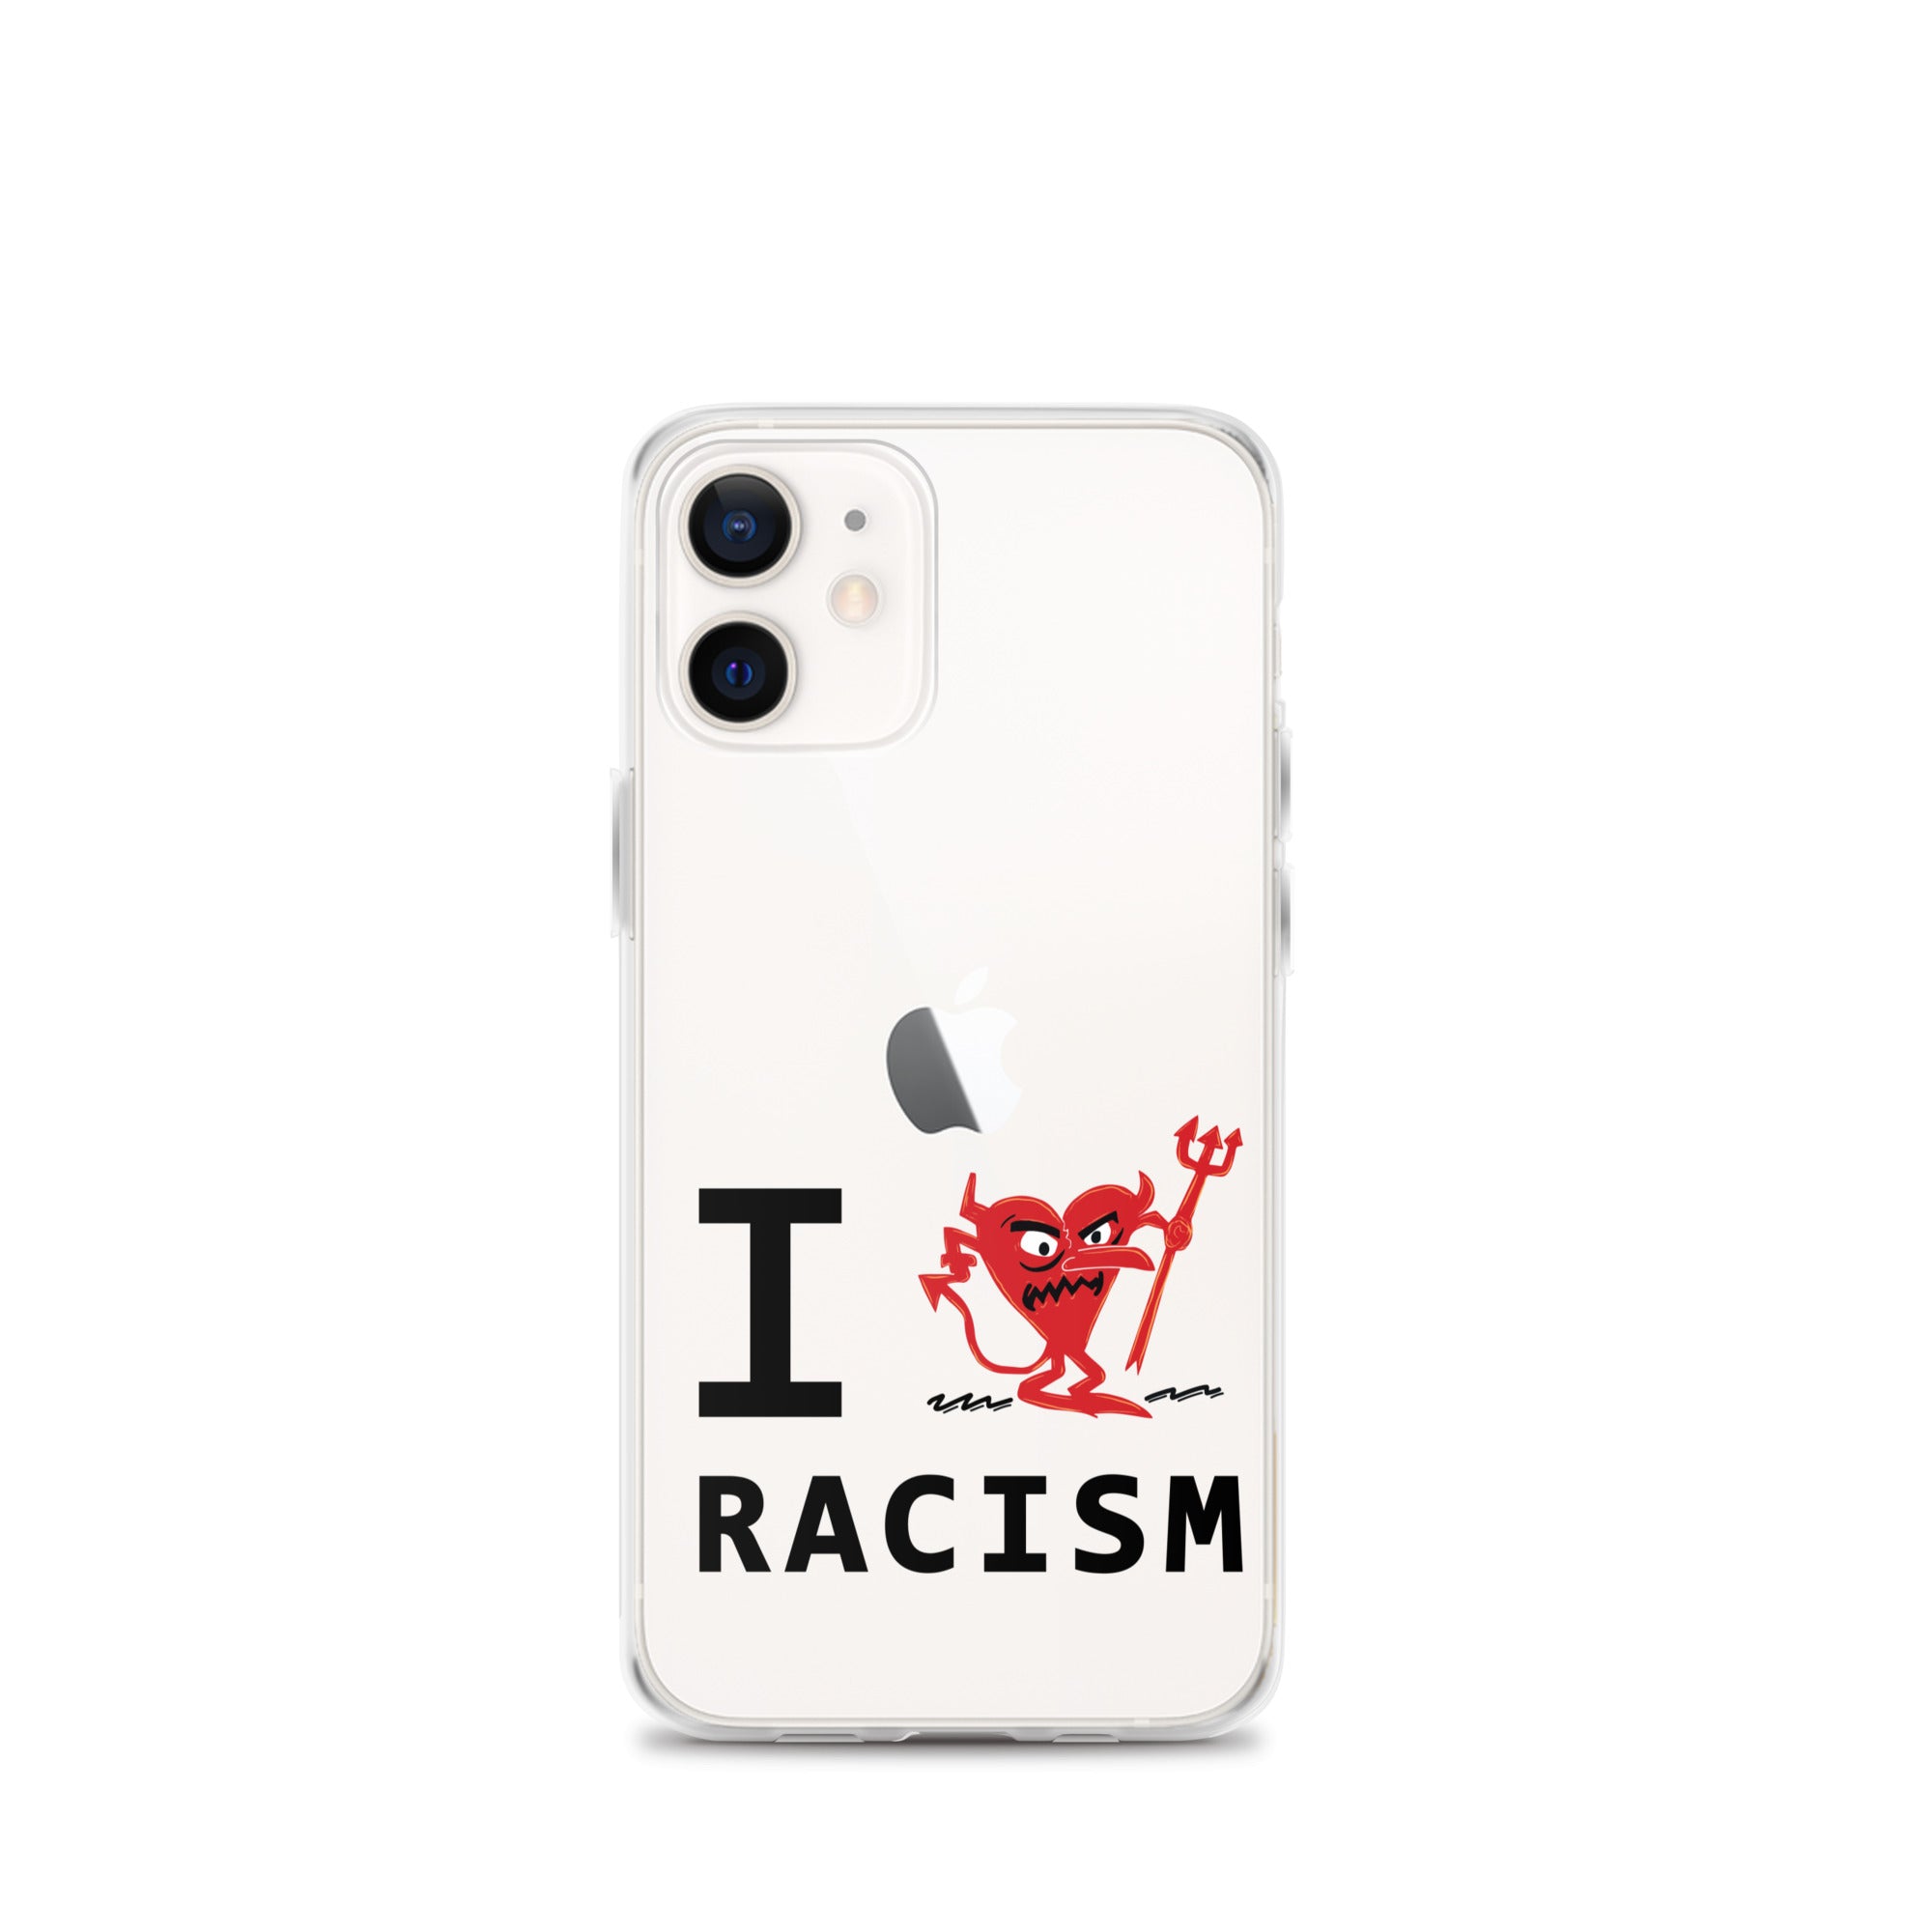 RACISM iPhone Case